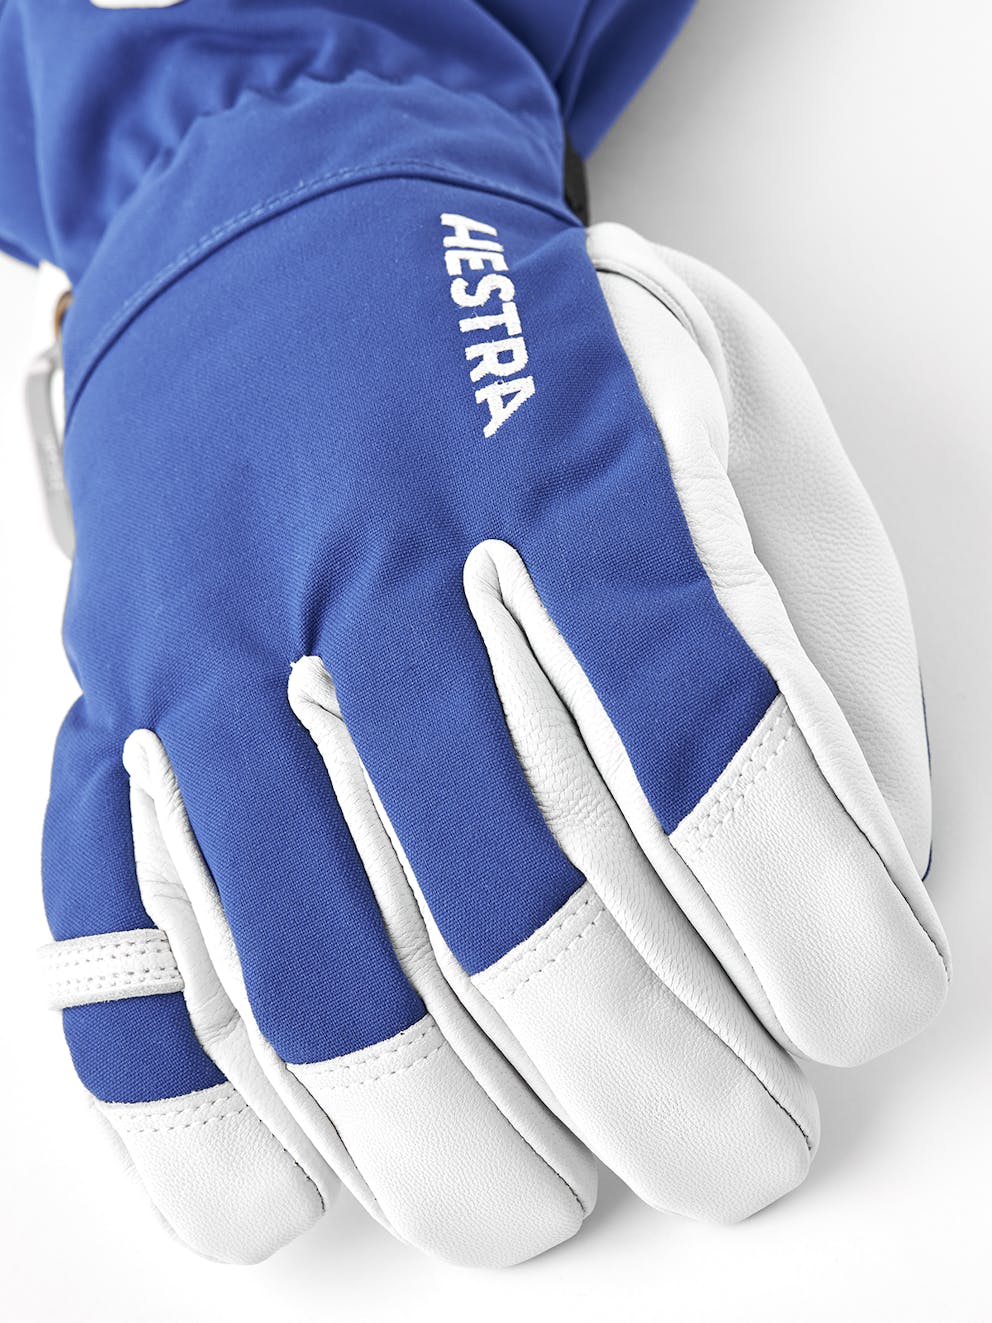 Army Leather Royal Hestra blue Gloves Heli Ski - 